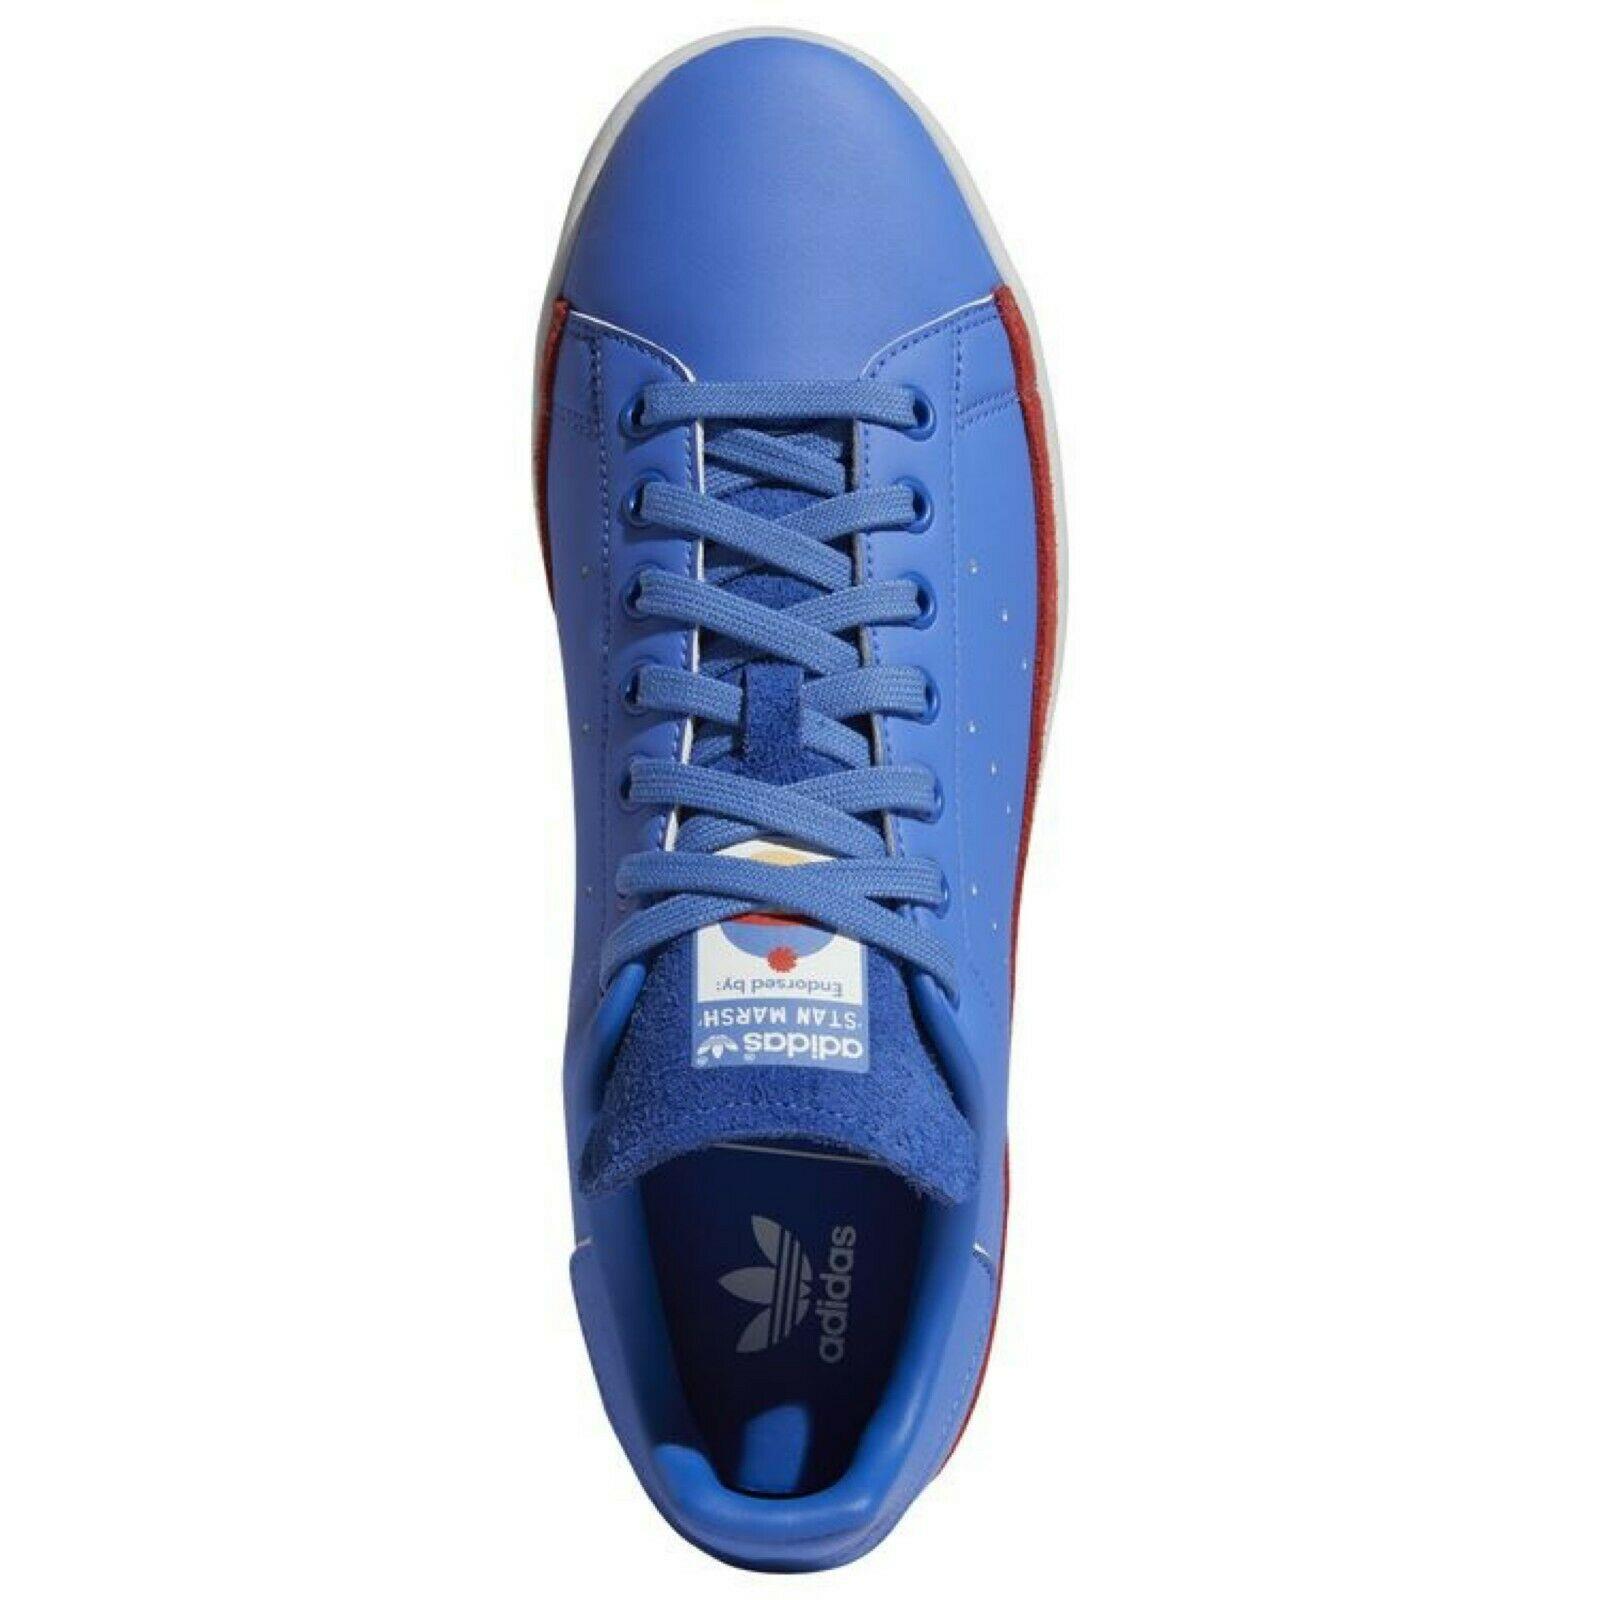 Adidas shoes Originals Stan Smith - Blue , Blue/Red/White Manufacturer 8